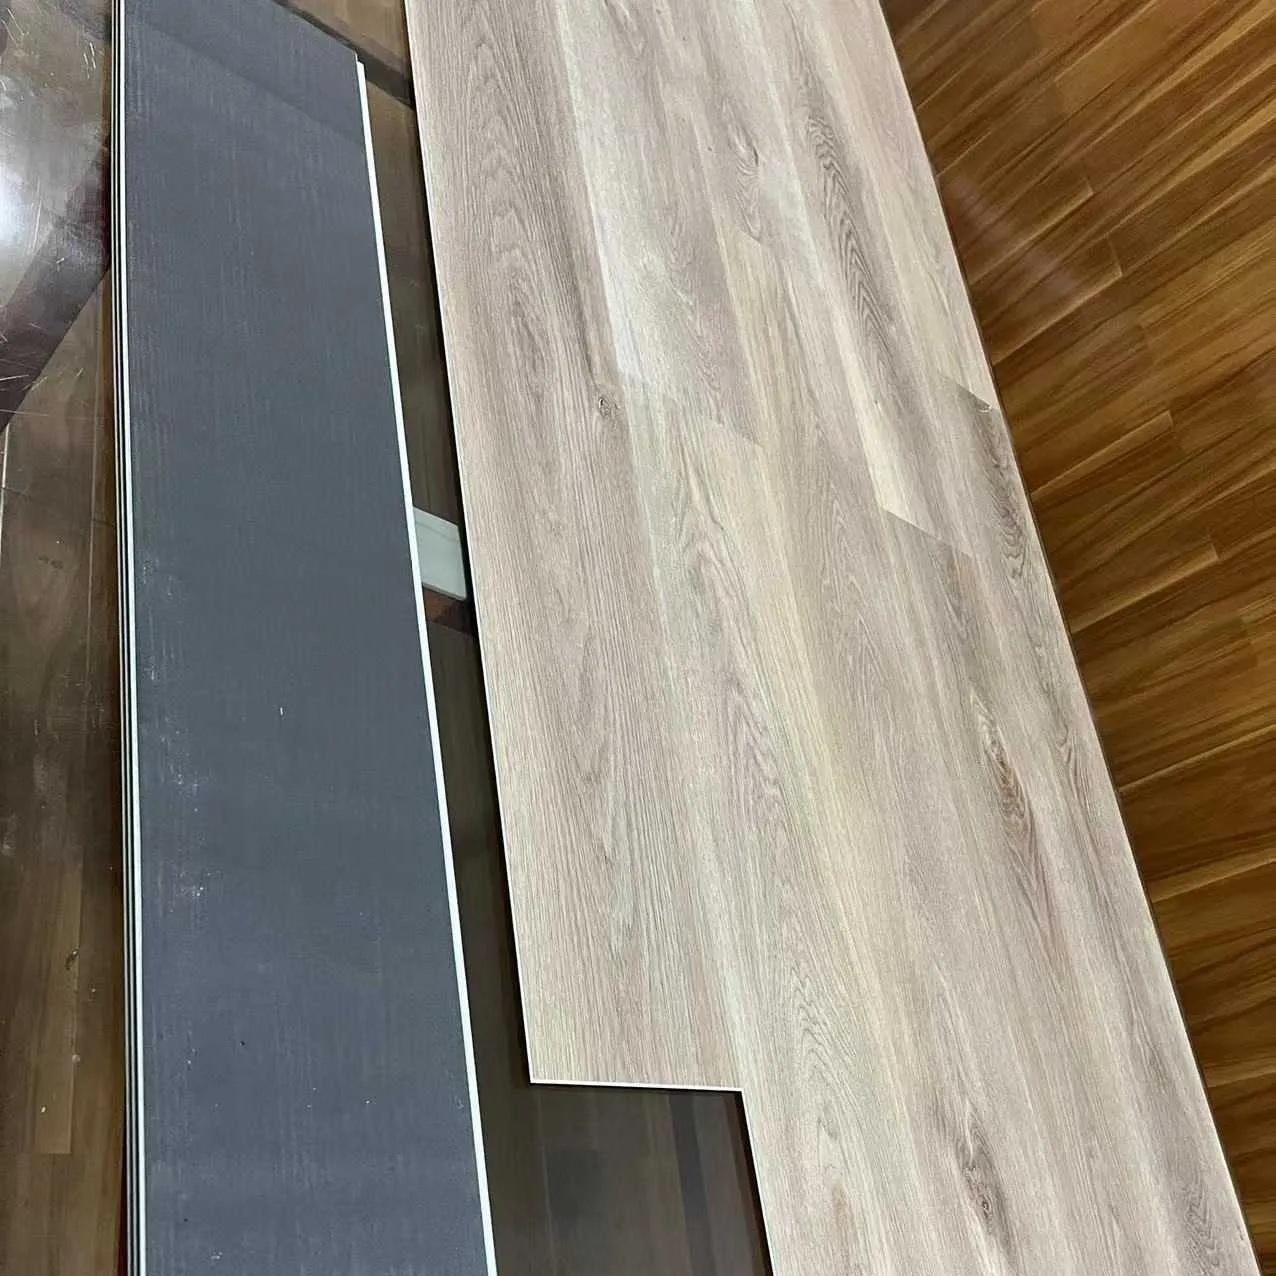 Waterproof pvc wood style Unilin Click LVT Flooring PVC Floor Tile spc Vinyl Flooring plank